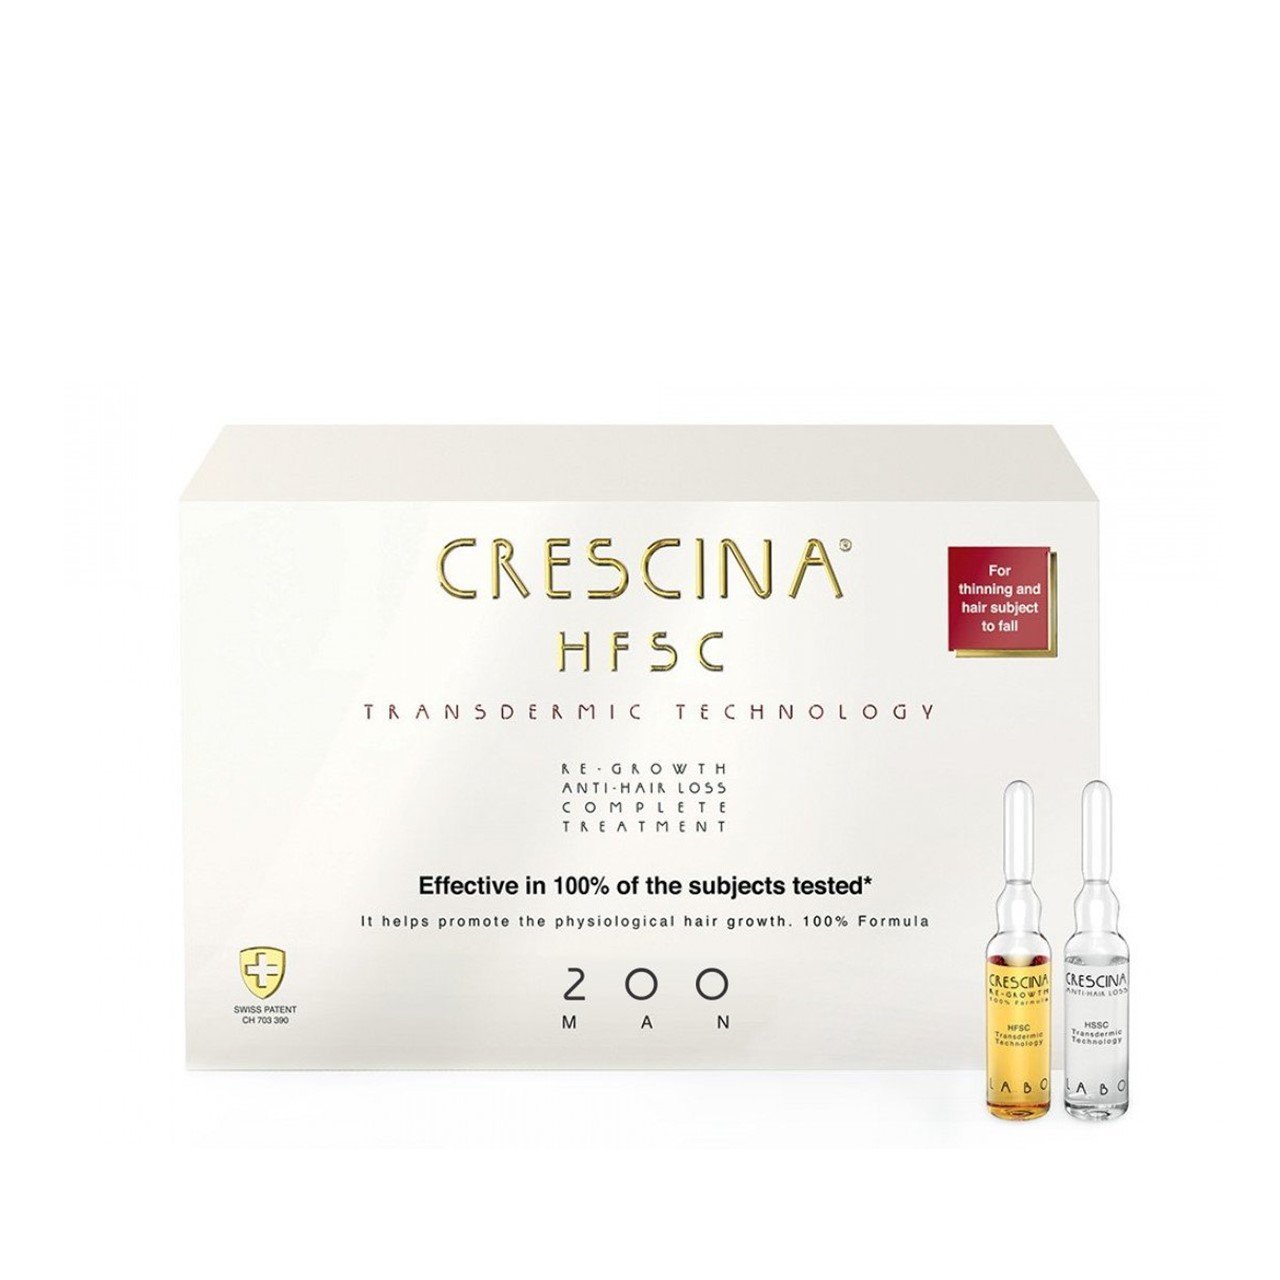 Crescina HFSC Transdermic Treatment 200 Man Ampoules 3.5ml x10+10